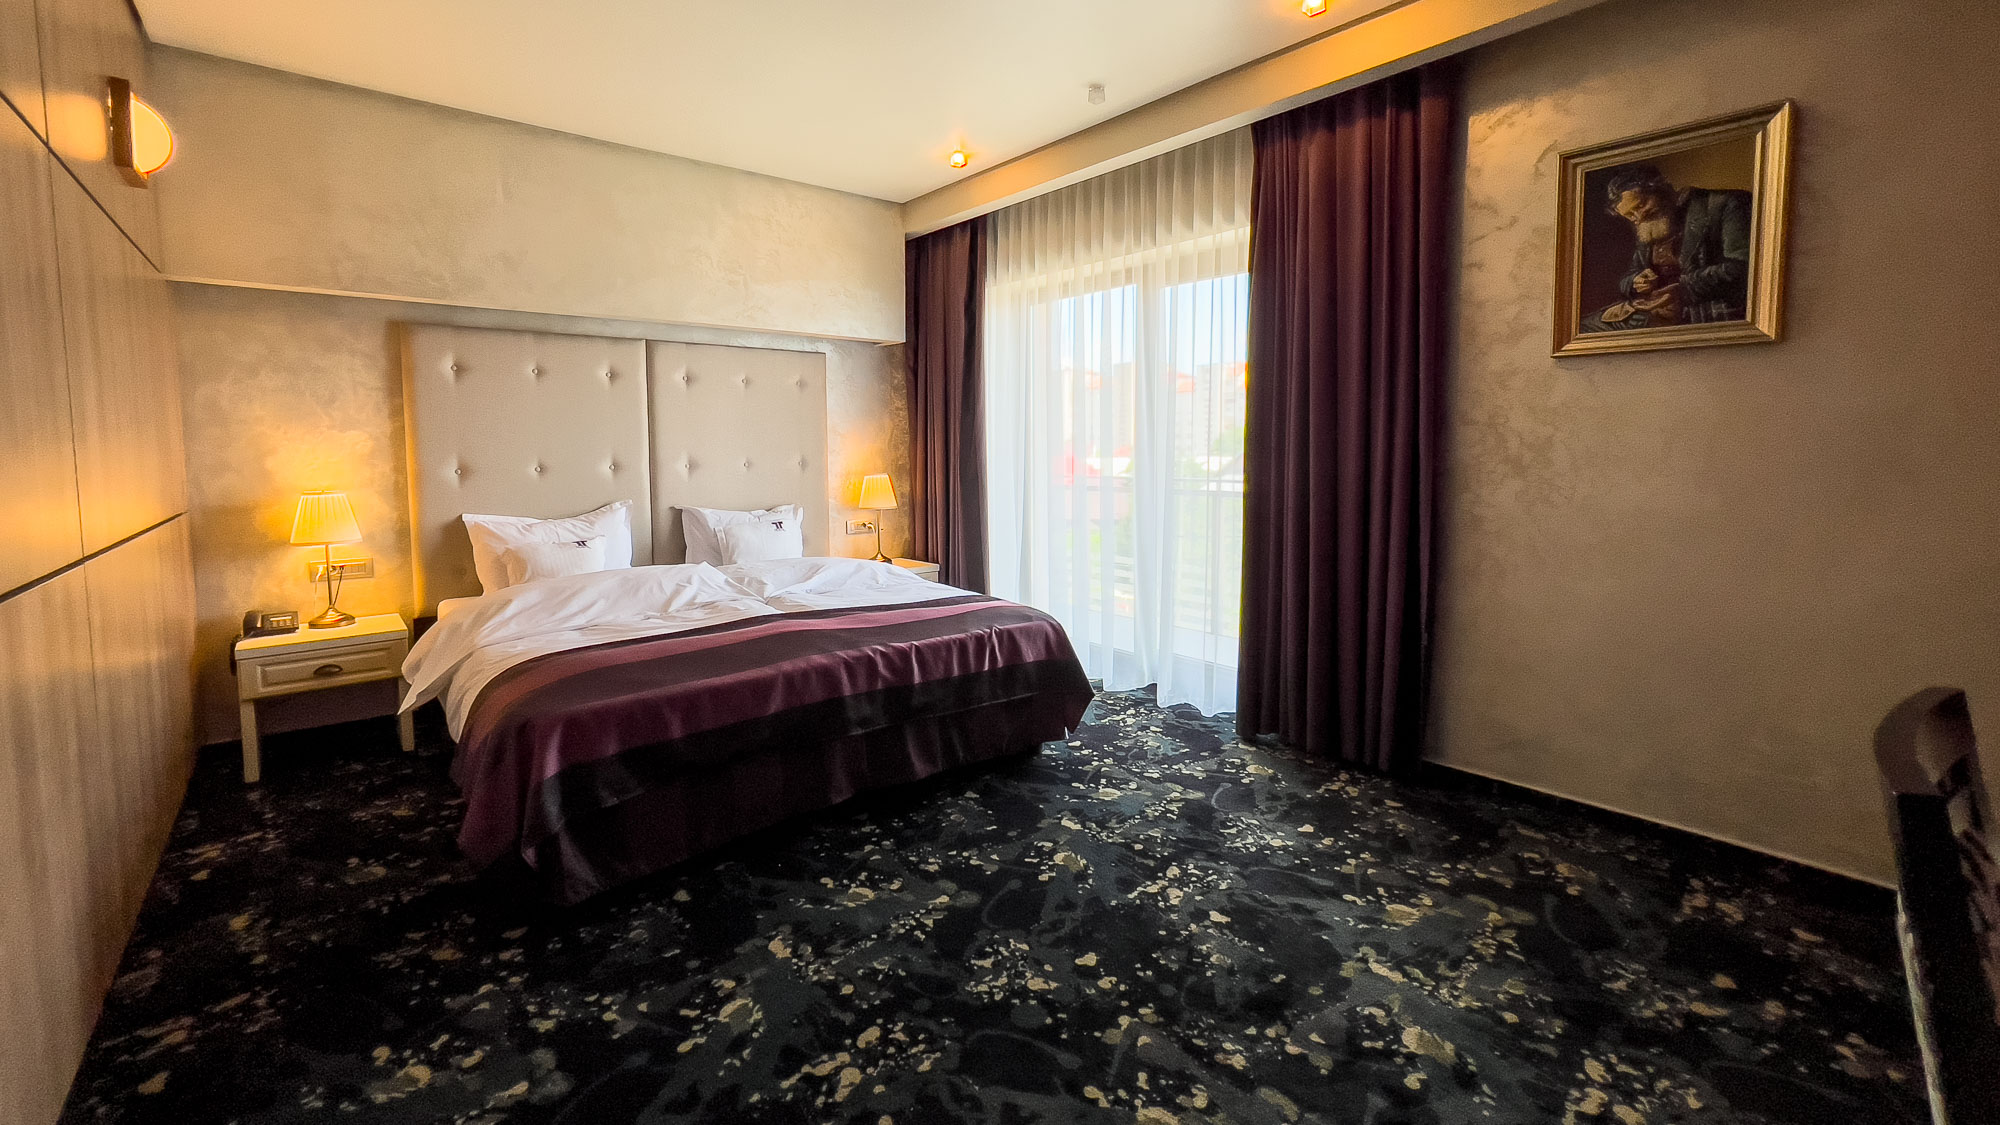 Hotel Tolea - Double room